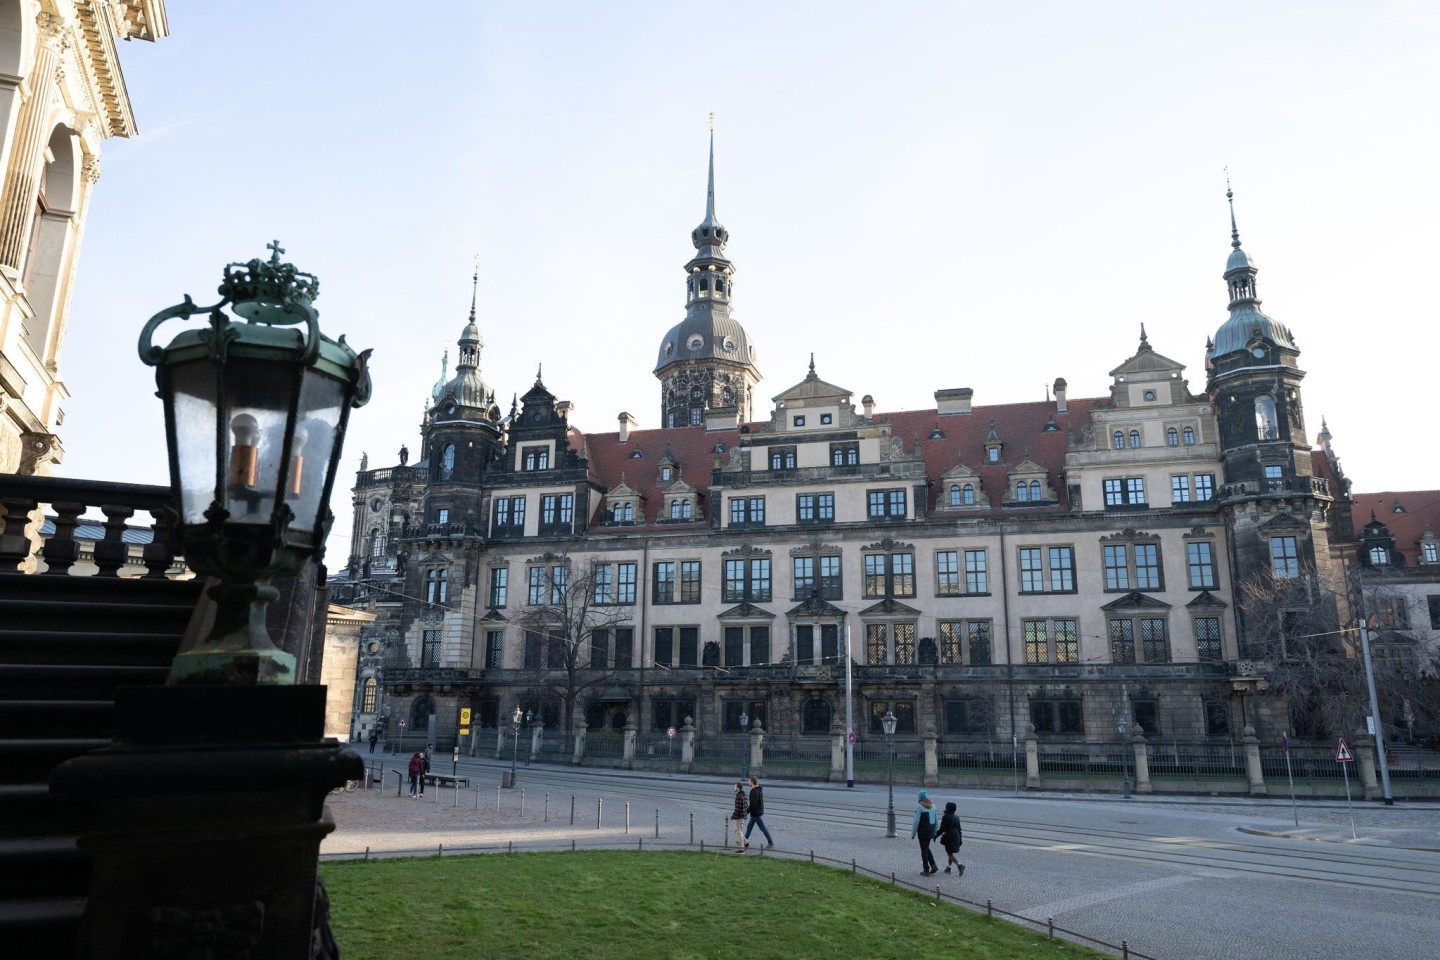 Das Residenzschloss mit dem Grünen Gewölbe in Dresden, Ort eines spektakulären Juwelendiebstahls.